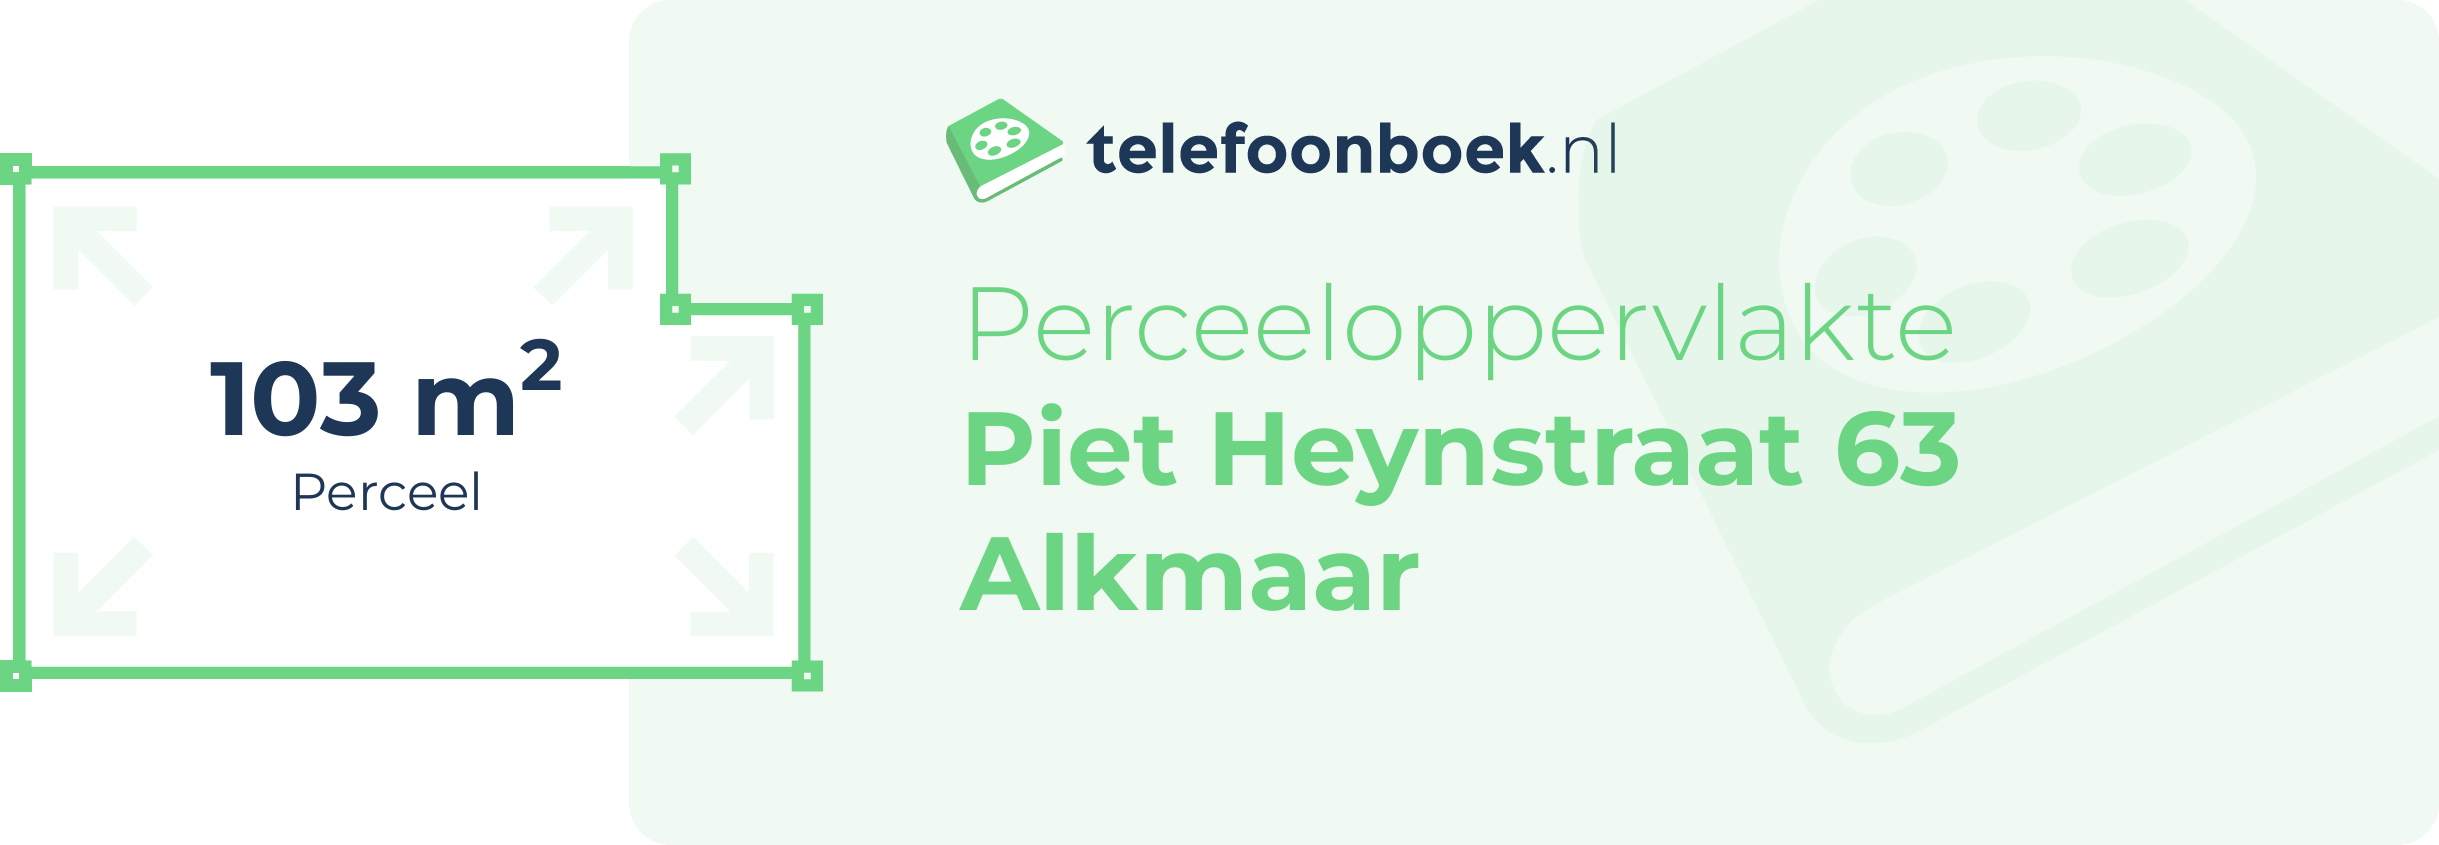 Perceeloppervlakte Piet Heynstraat 63 Alkmaar